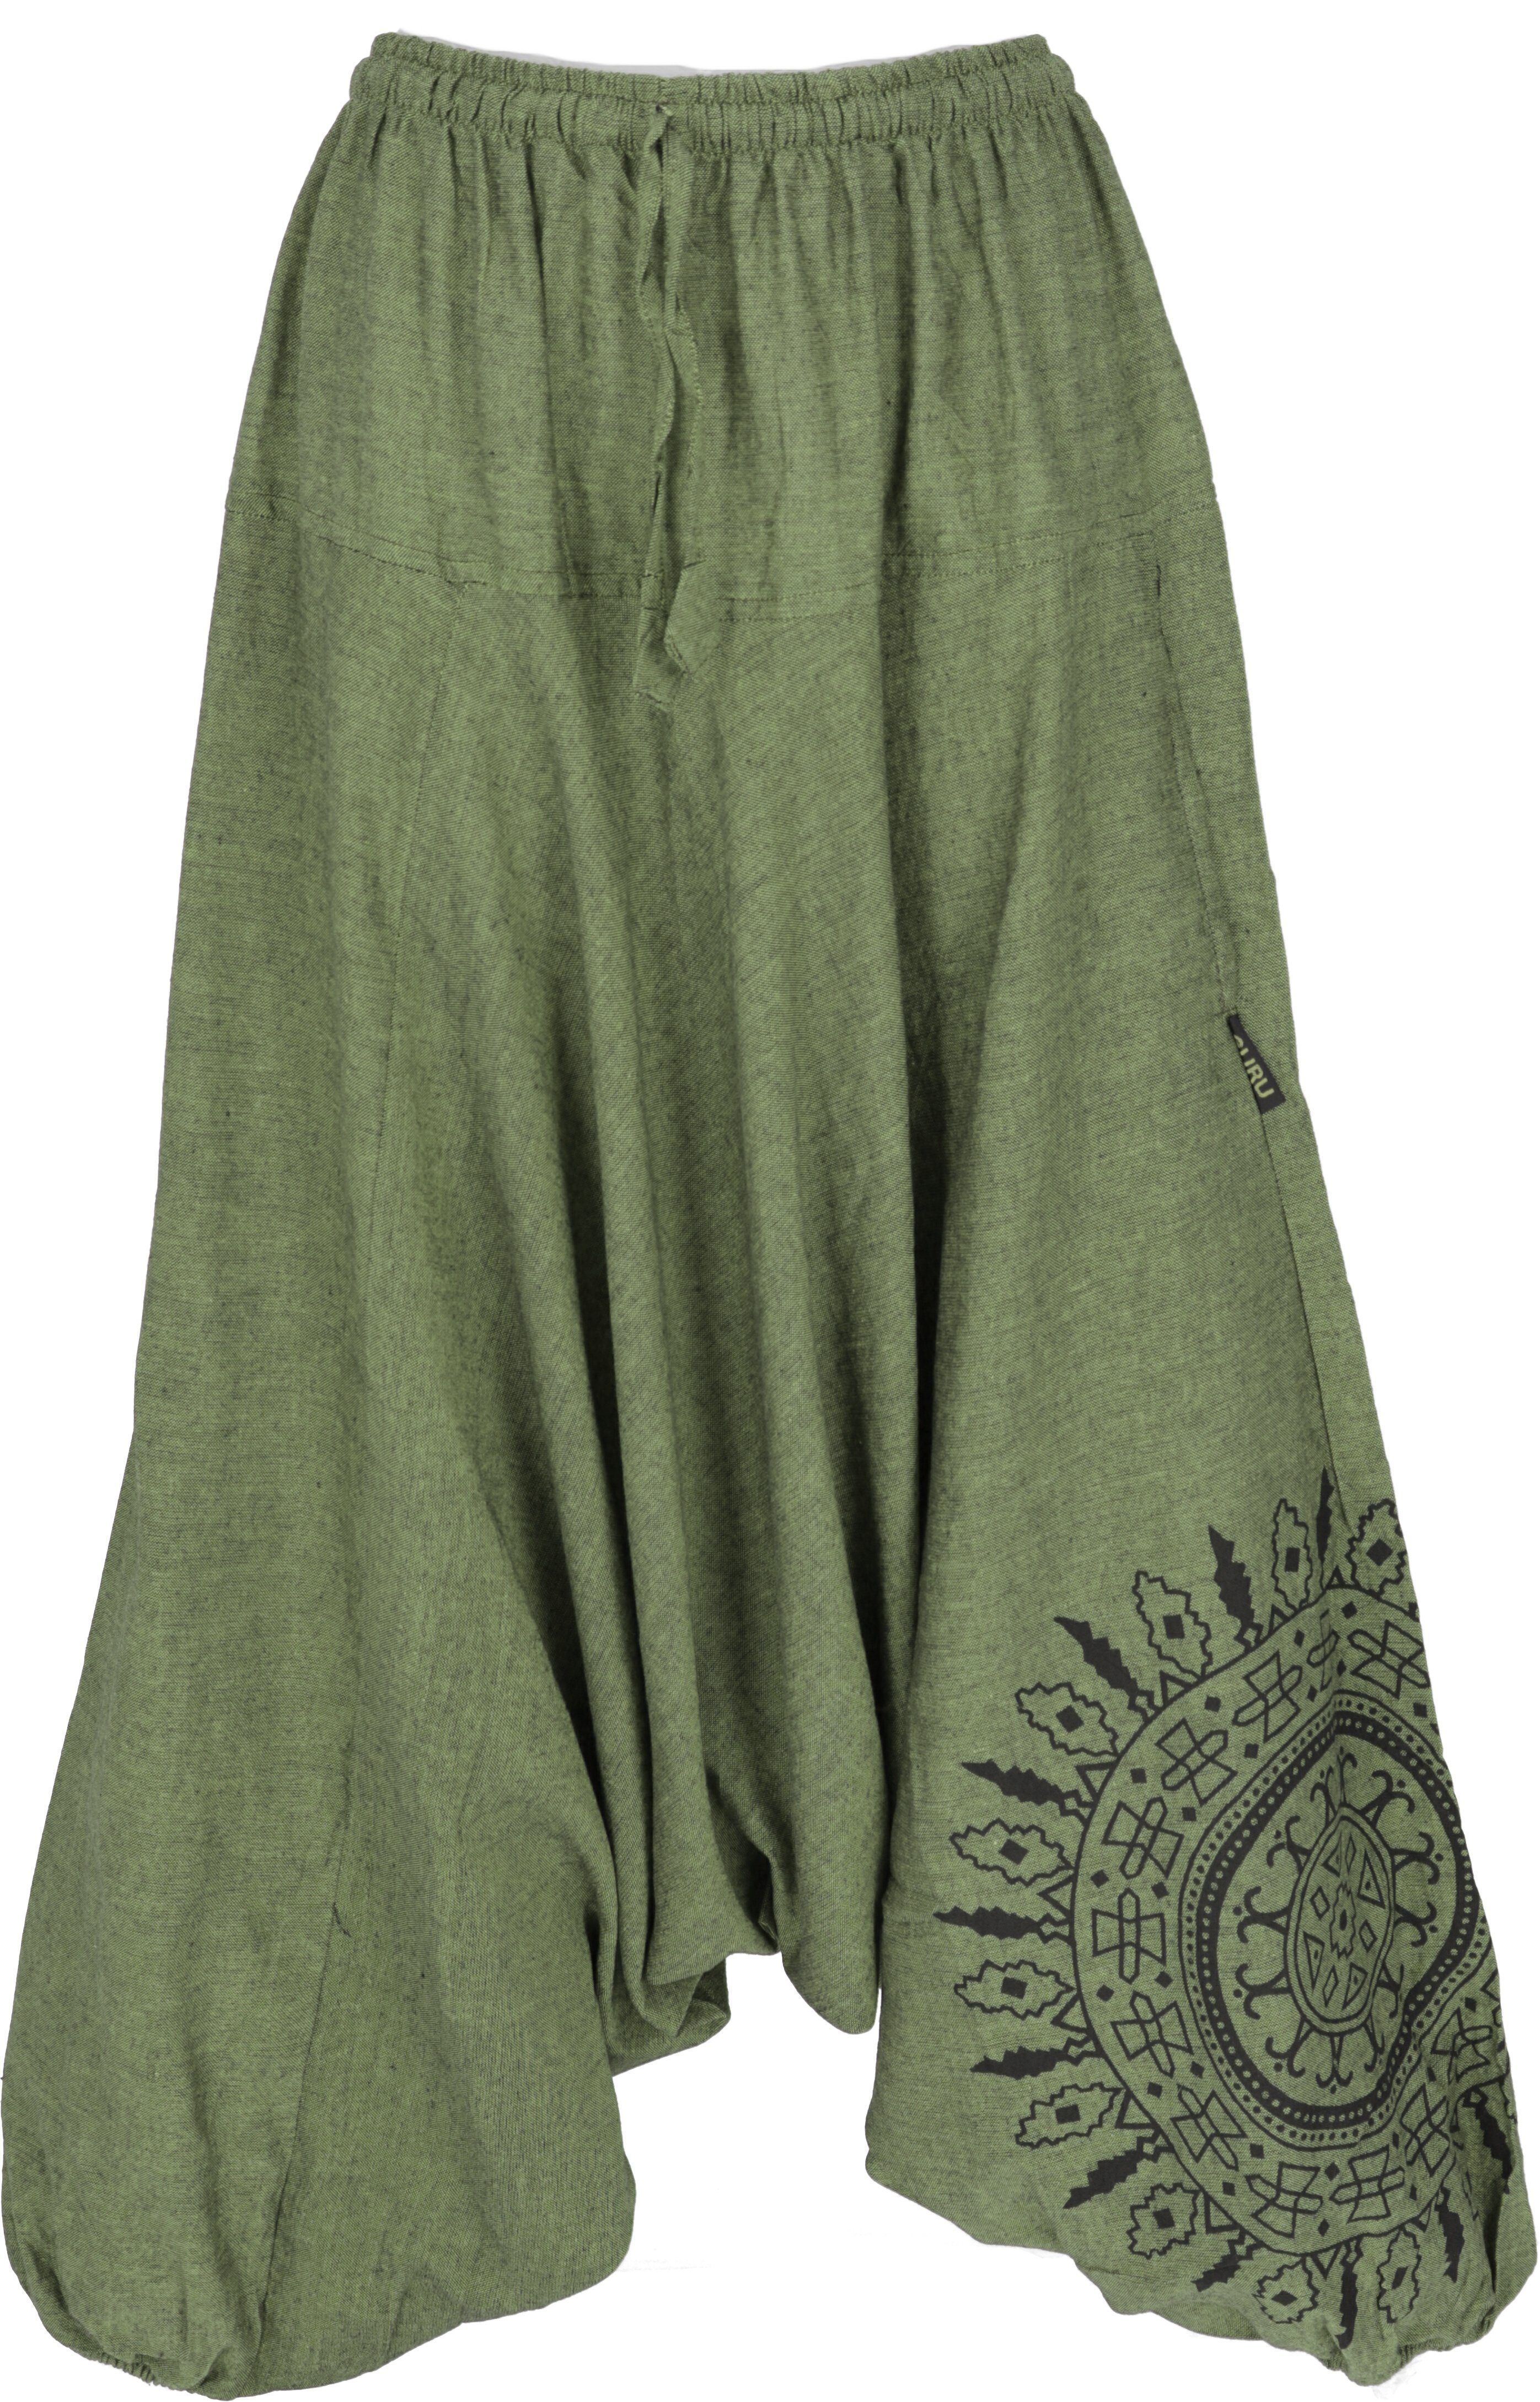 Haremshose alternative Pumphose mit Style, Bekleidung olivgrün Guru-Shop Ethno Mandala,.. Relaxhose Pluderhose,